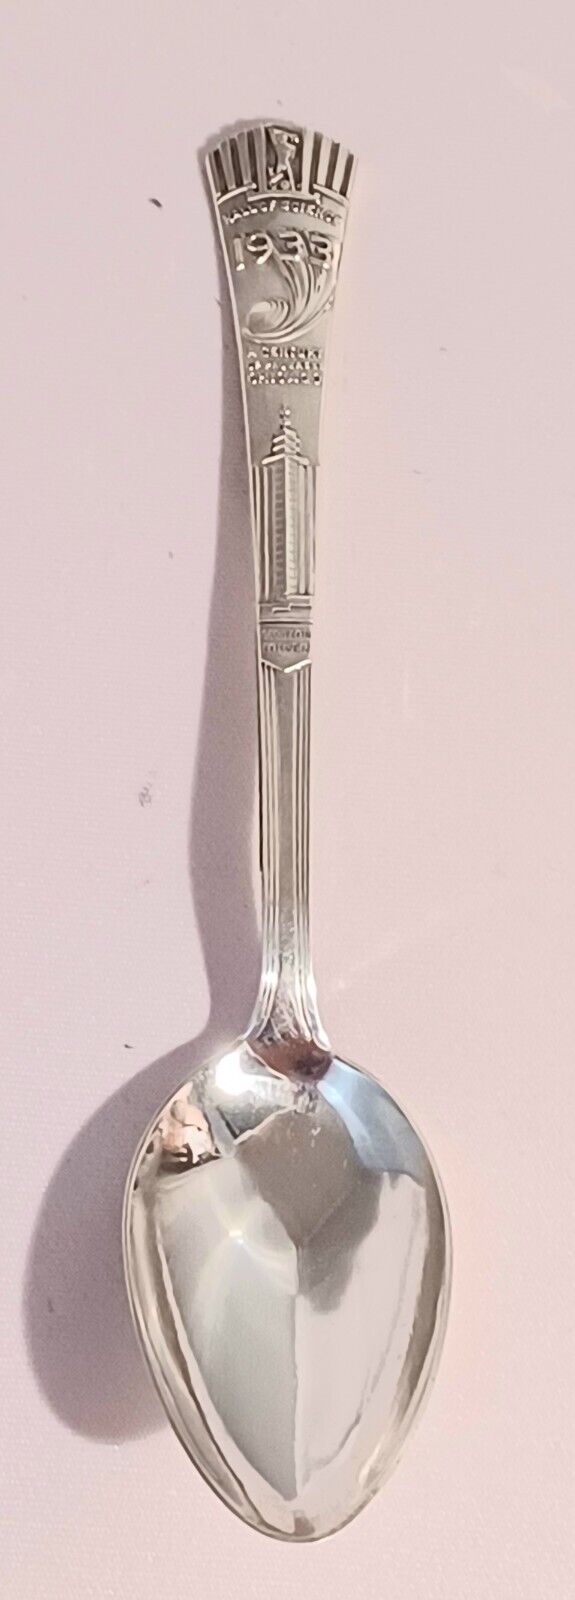 1933 Chicago Worlds Fair Sterling Souvenir Spoon